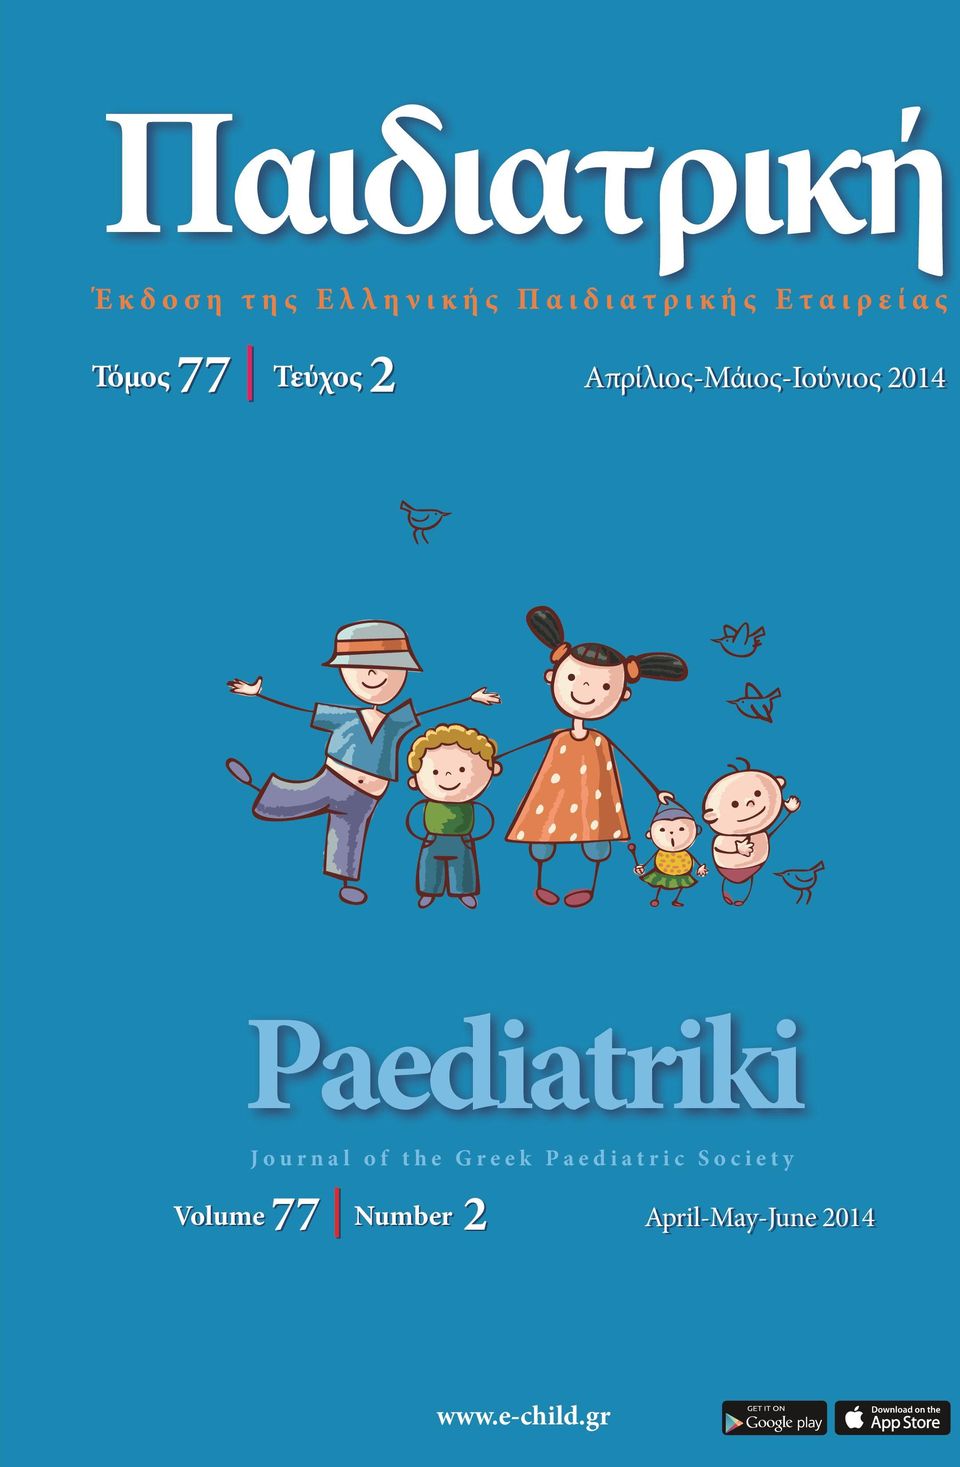 2014 Paediatriki Journal of the Greek Paediatric